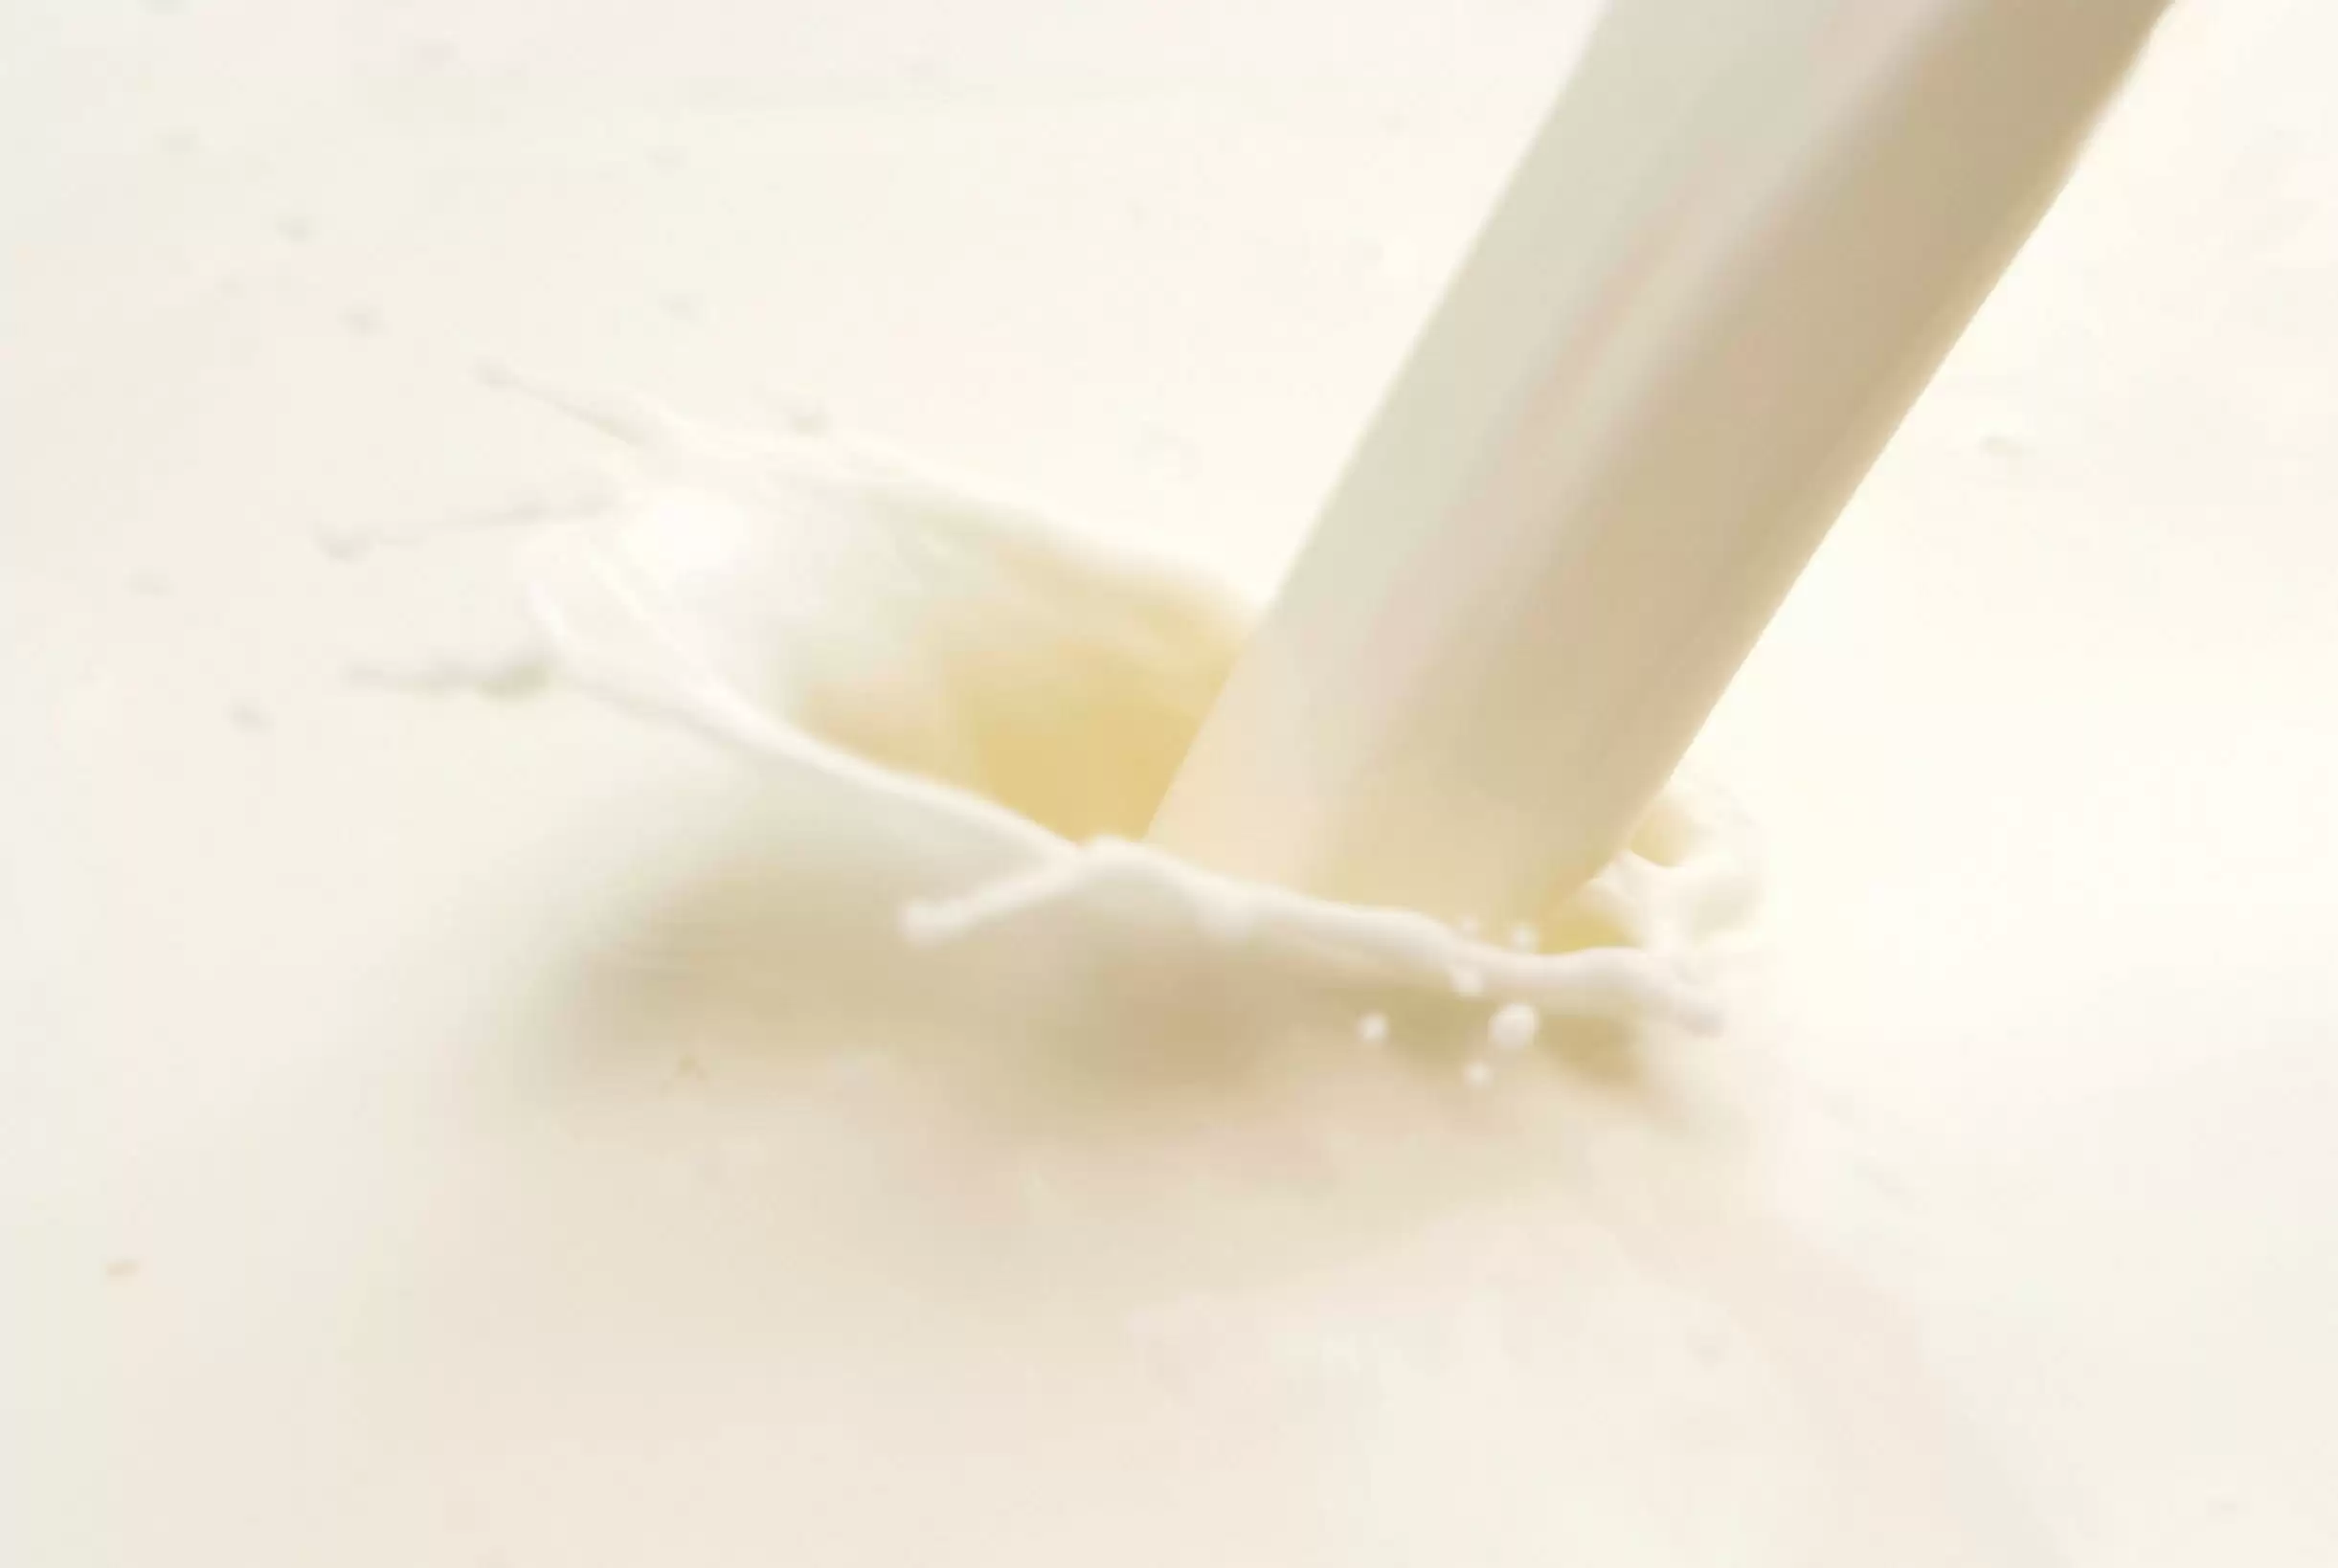 दूध कभी मत पीना, जानिये दूध पीने के 9 जानलेवा नुक्सान